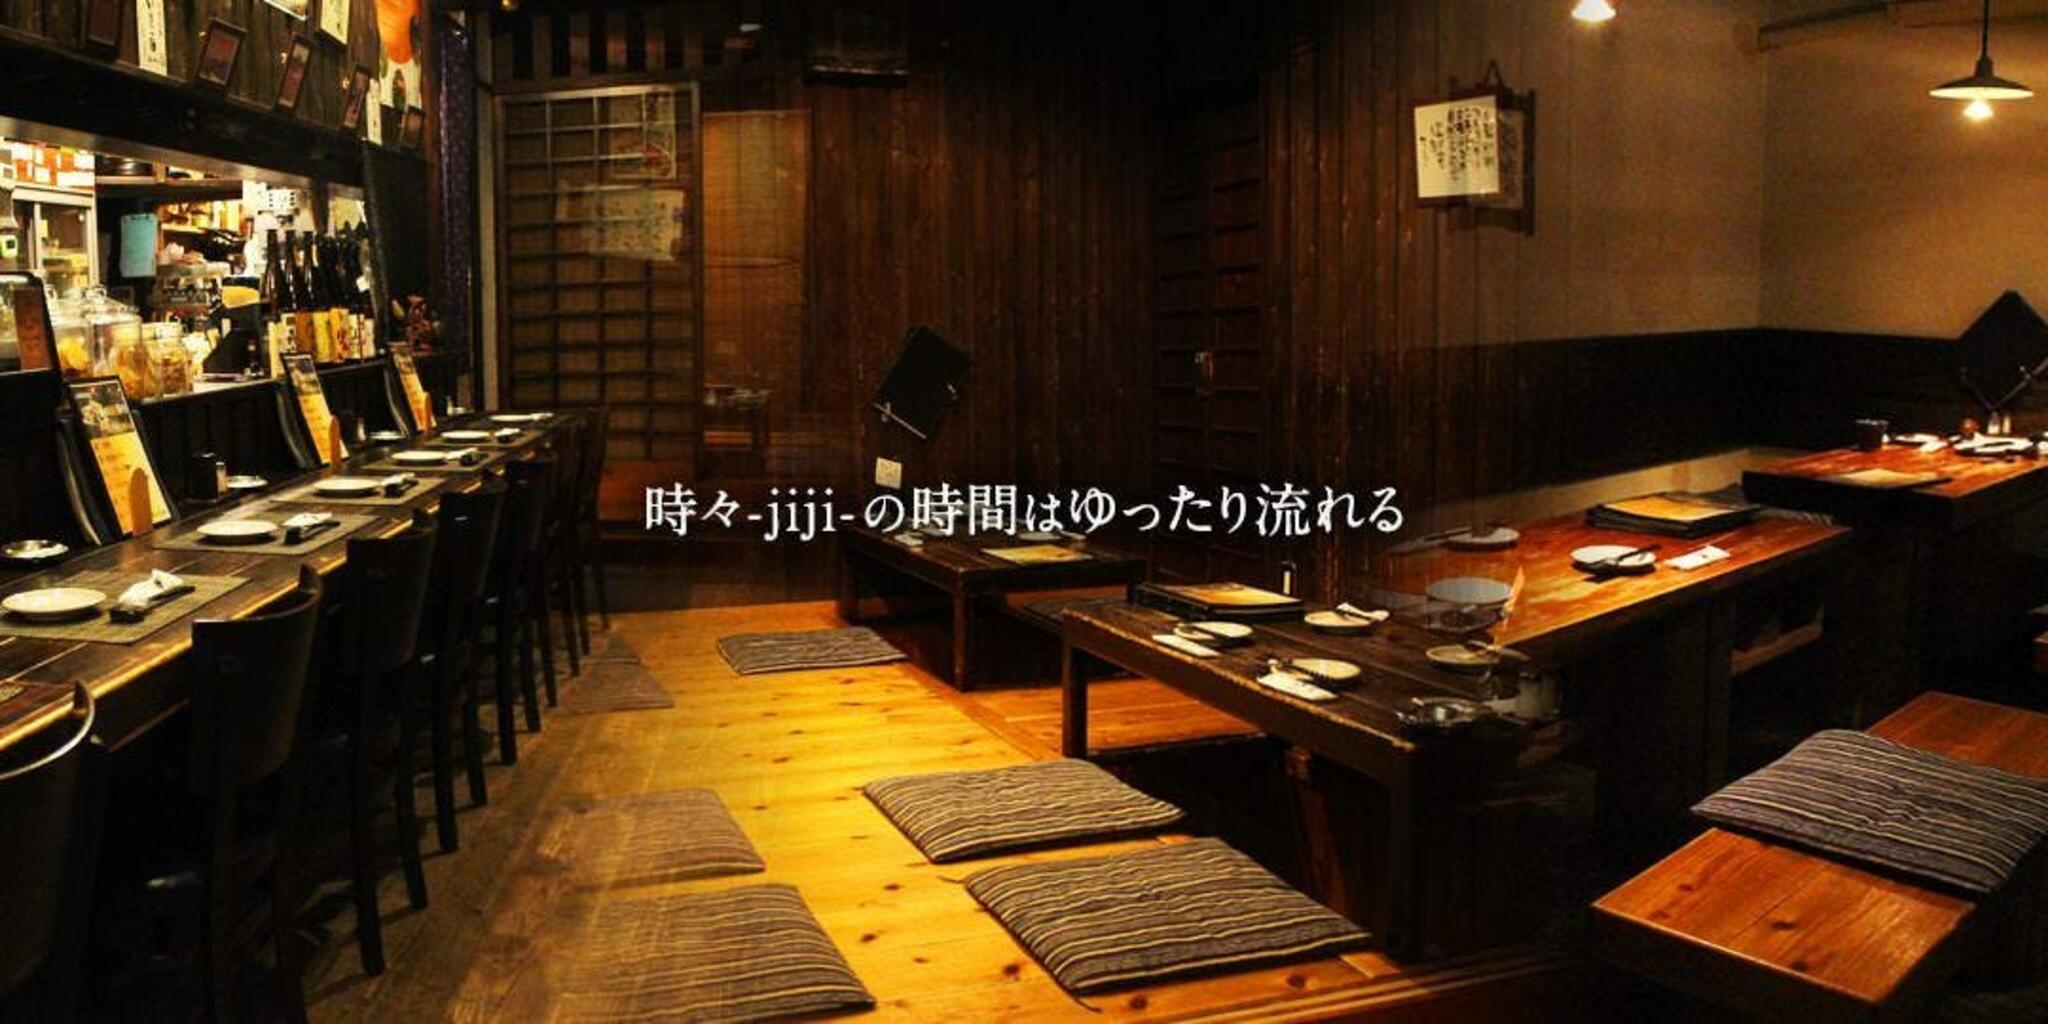 IZAKAYA 時々jiji 観音寺店の代表写真4